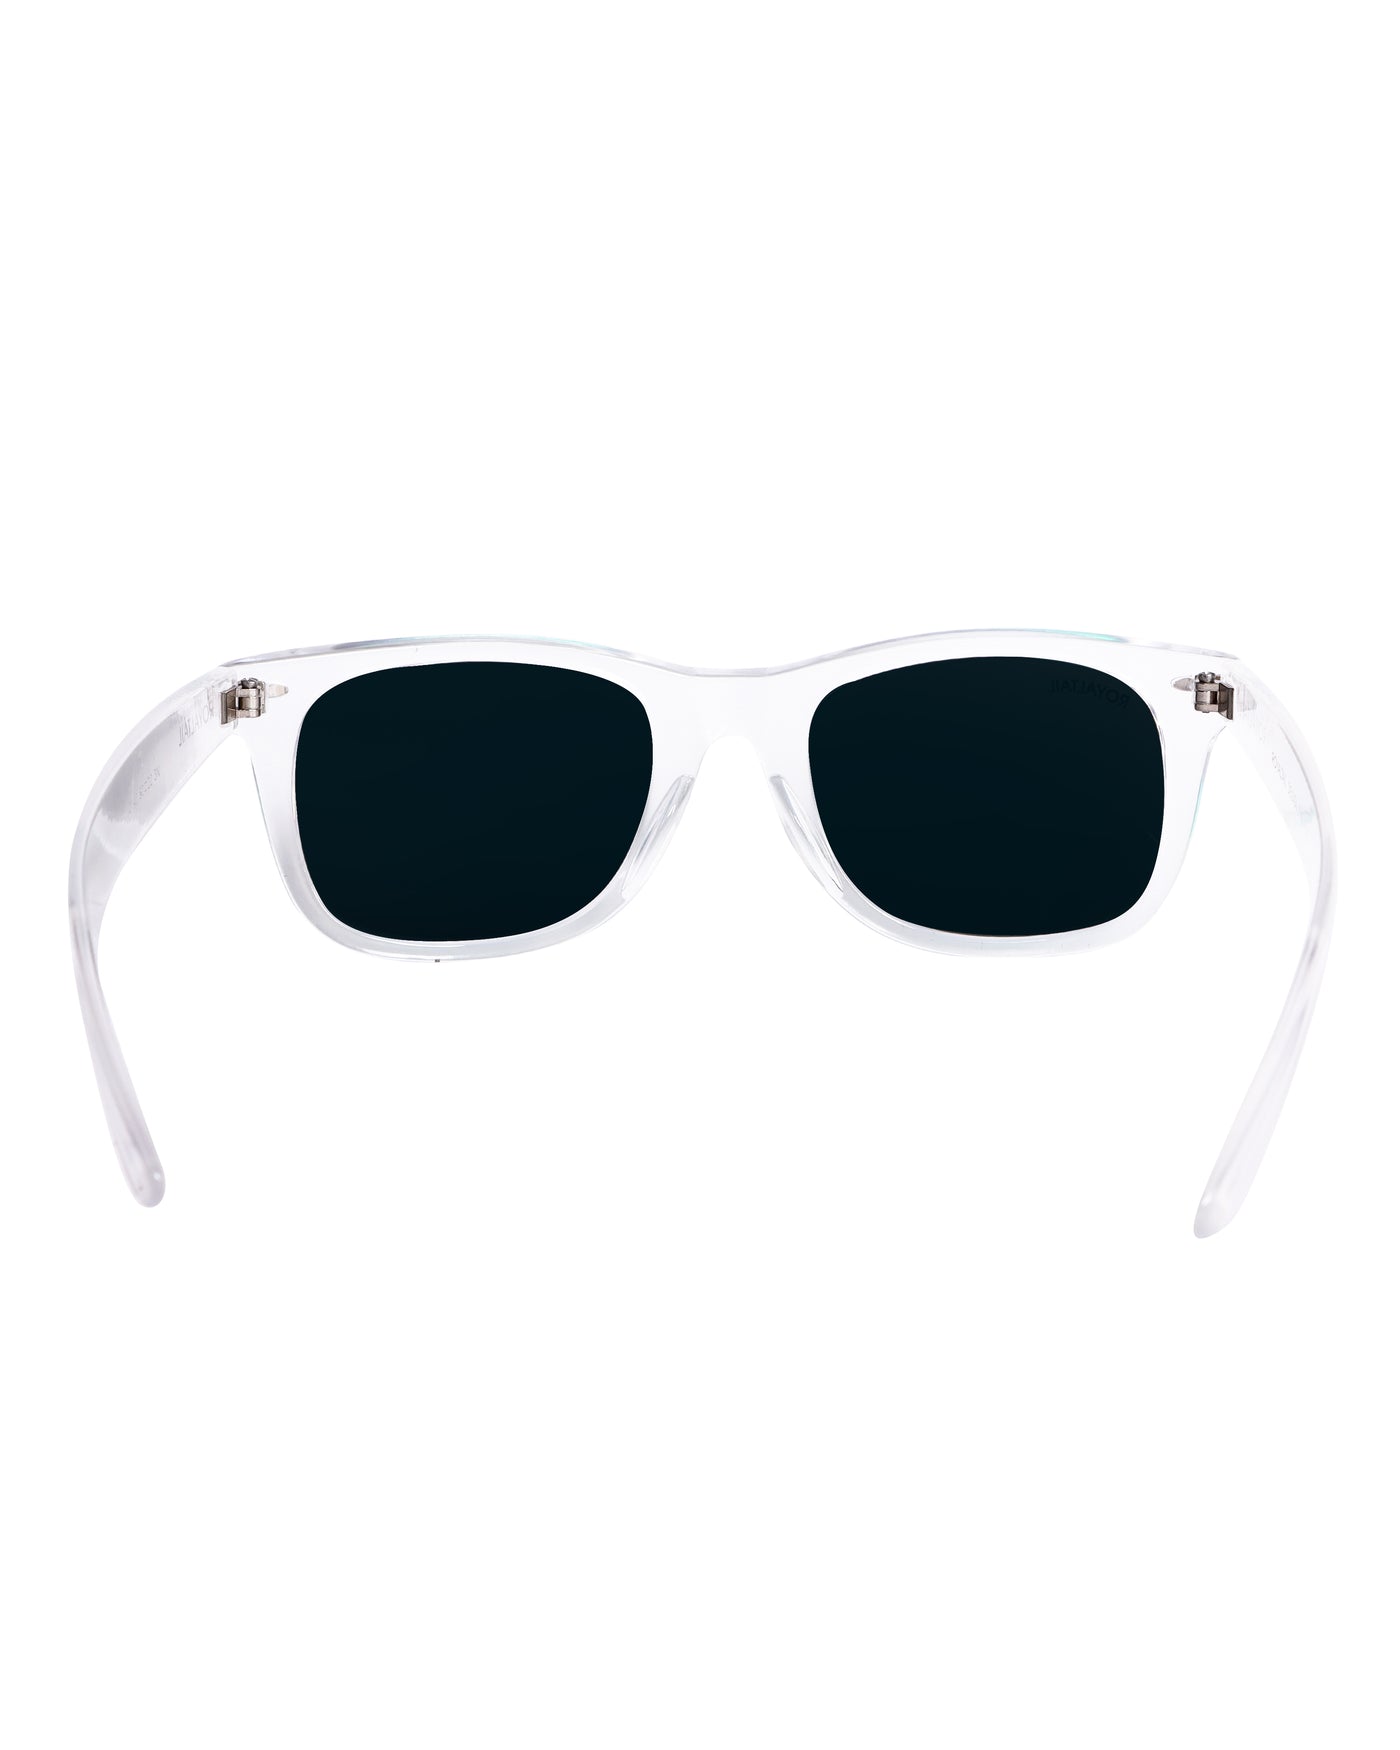 Unisex Aqua Blue Glass and Clear Frame Wayfarer Sunglasses